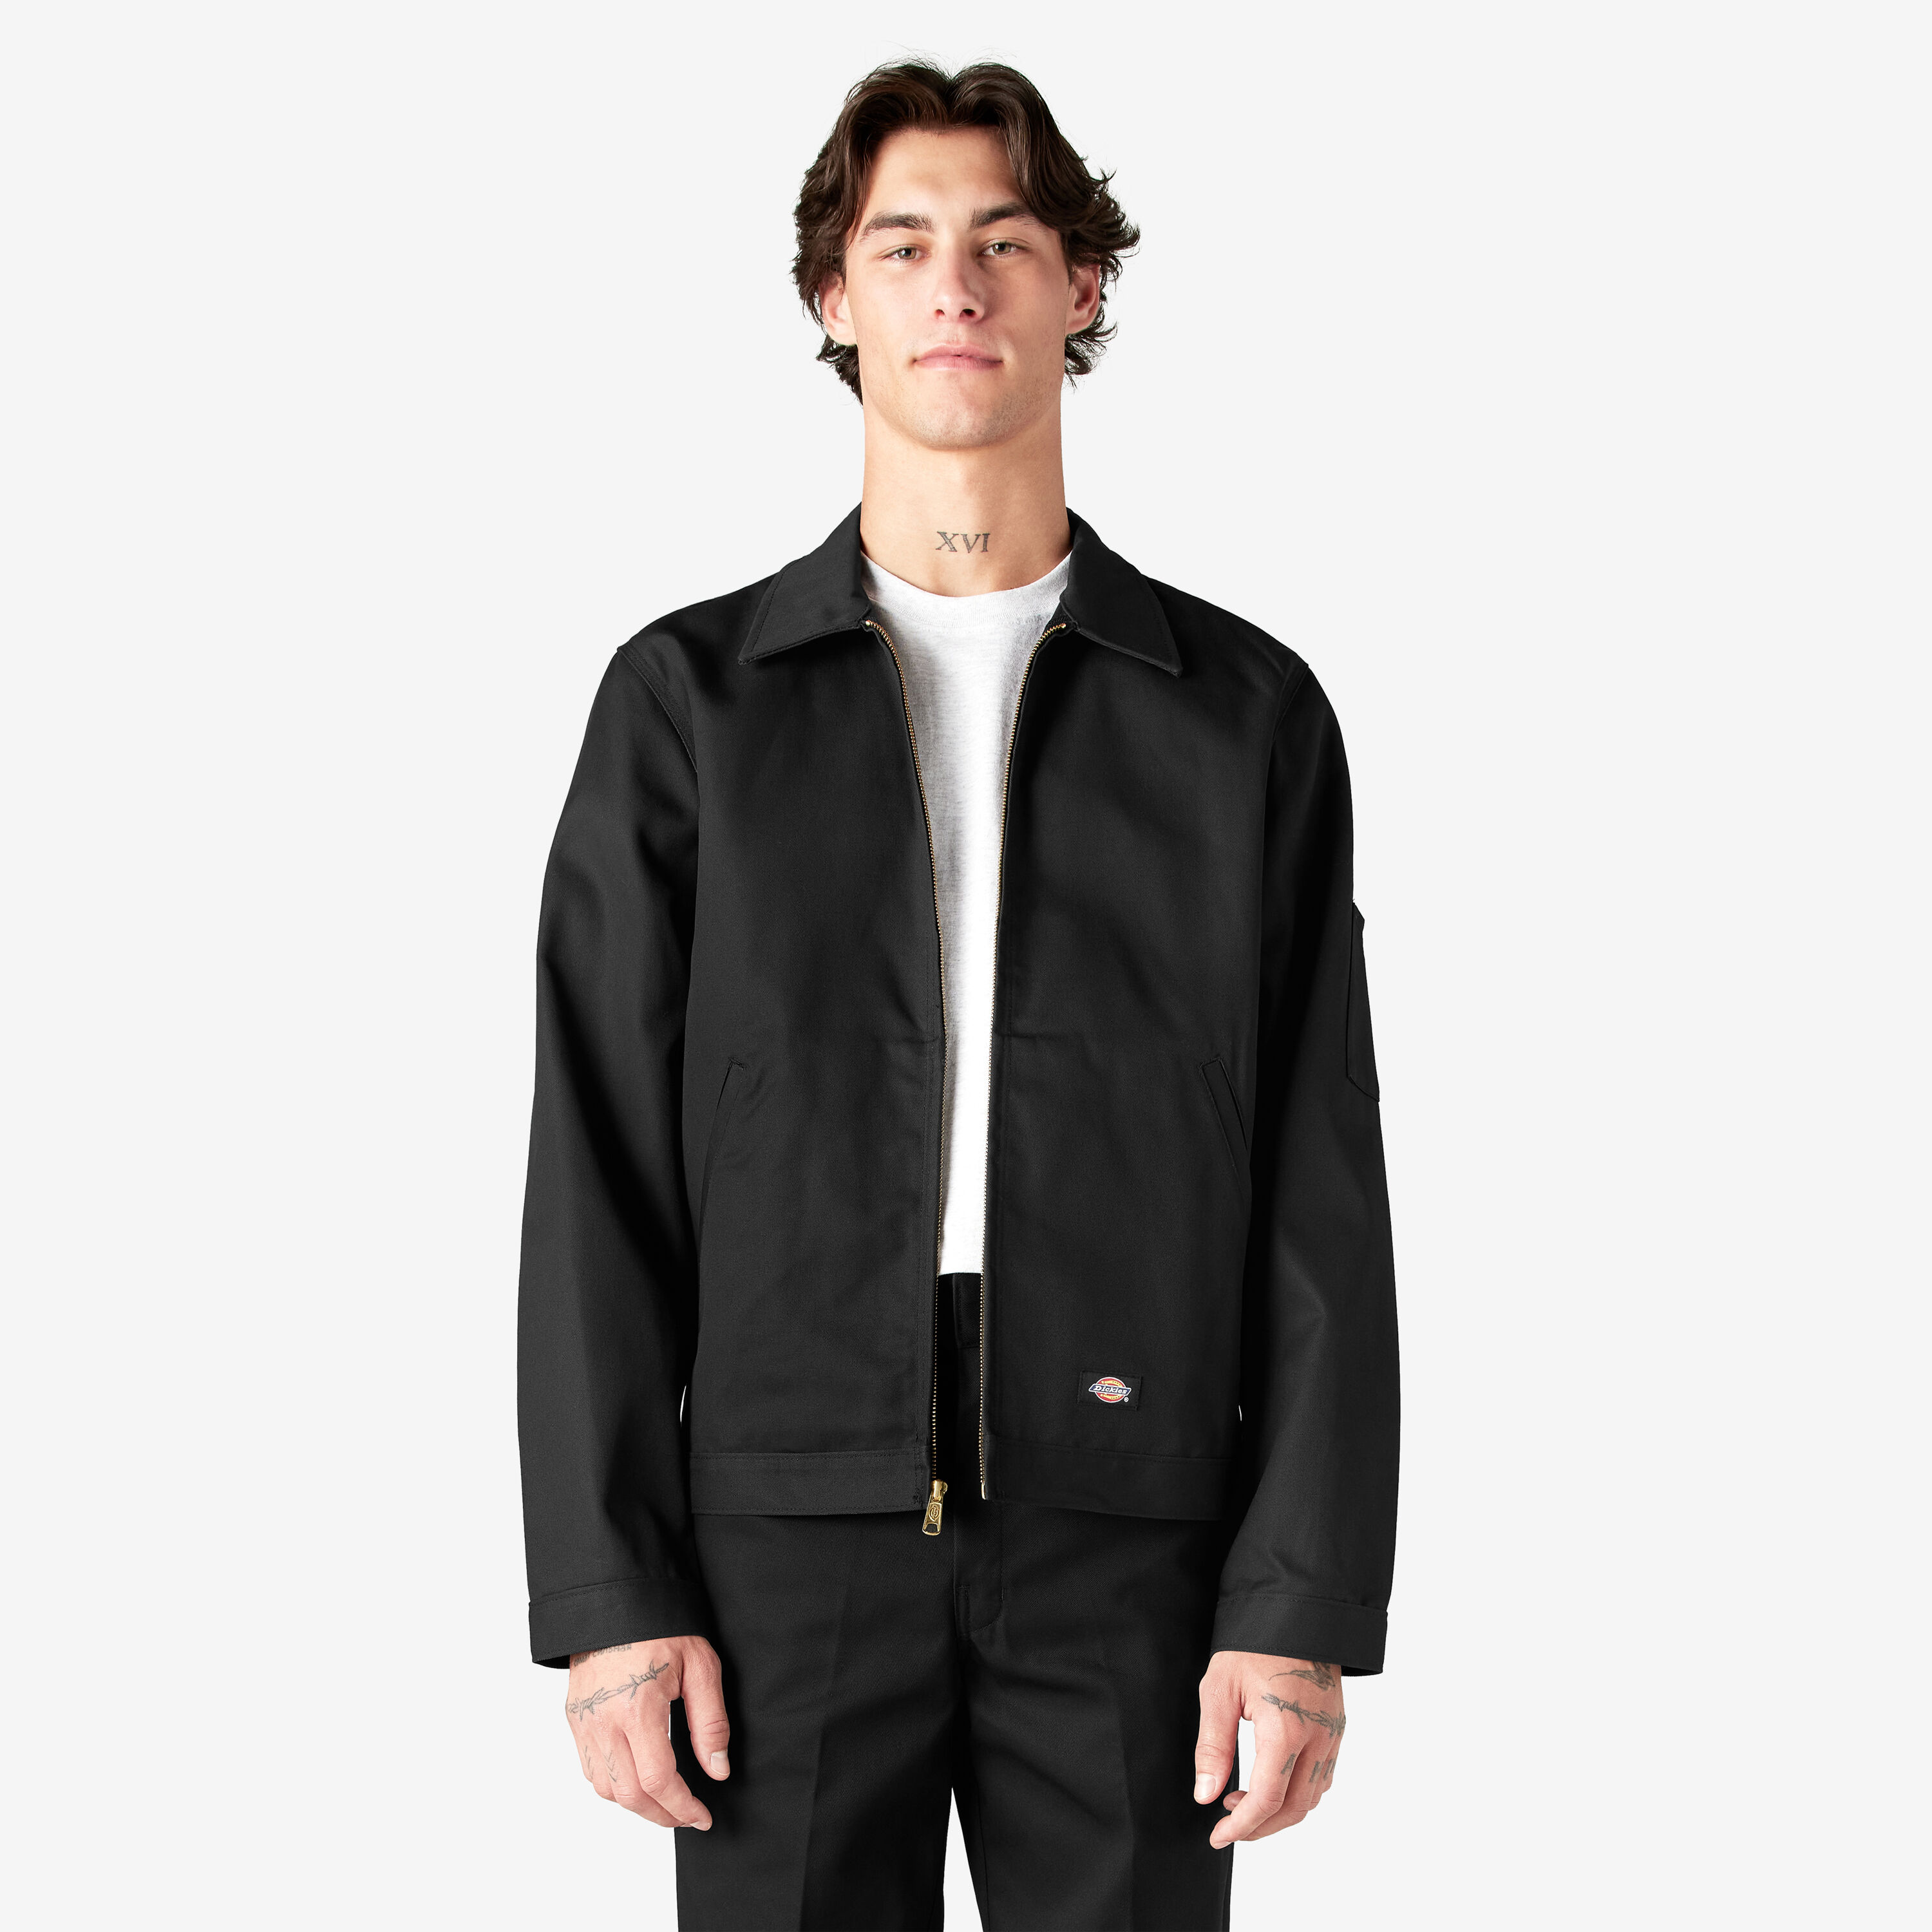 Dickies Industry Two Tone Work Jacket Black Men's Coat Sizes S-XXXL 